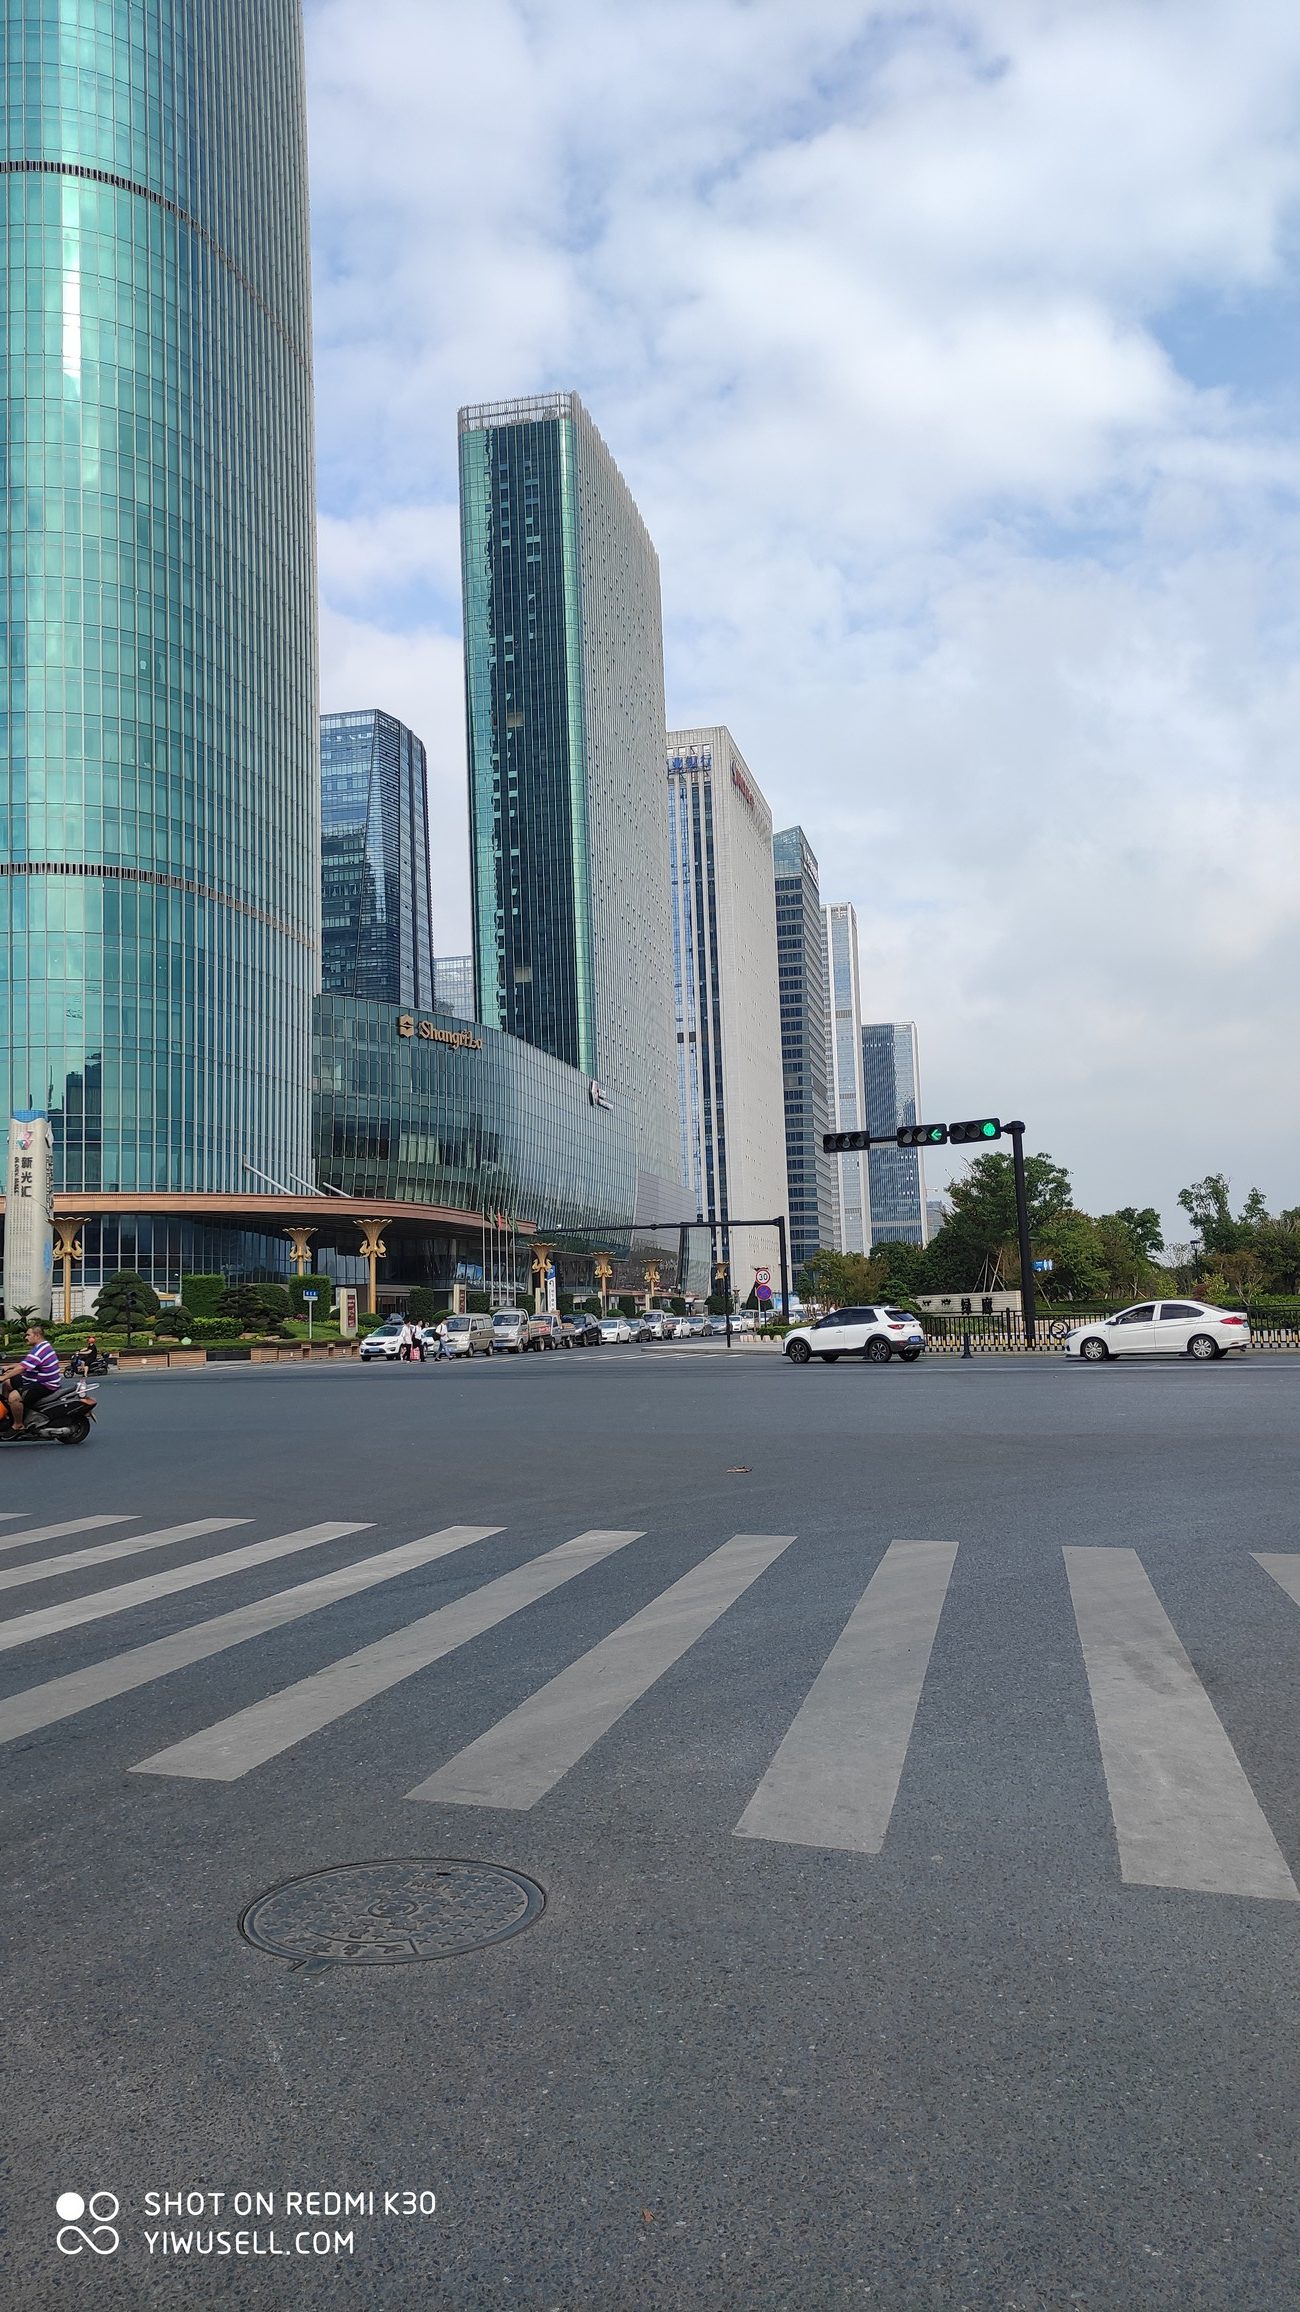 Yiwu International Trade City was established in 1982